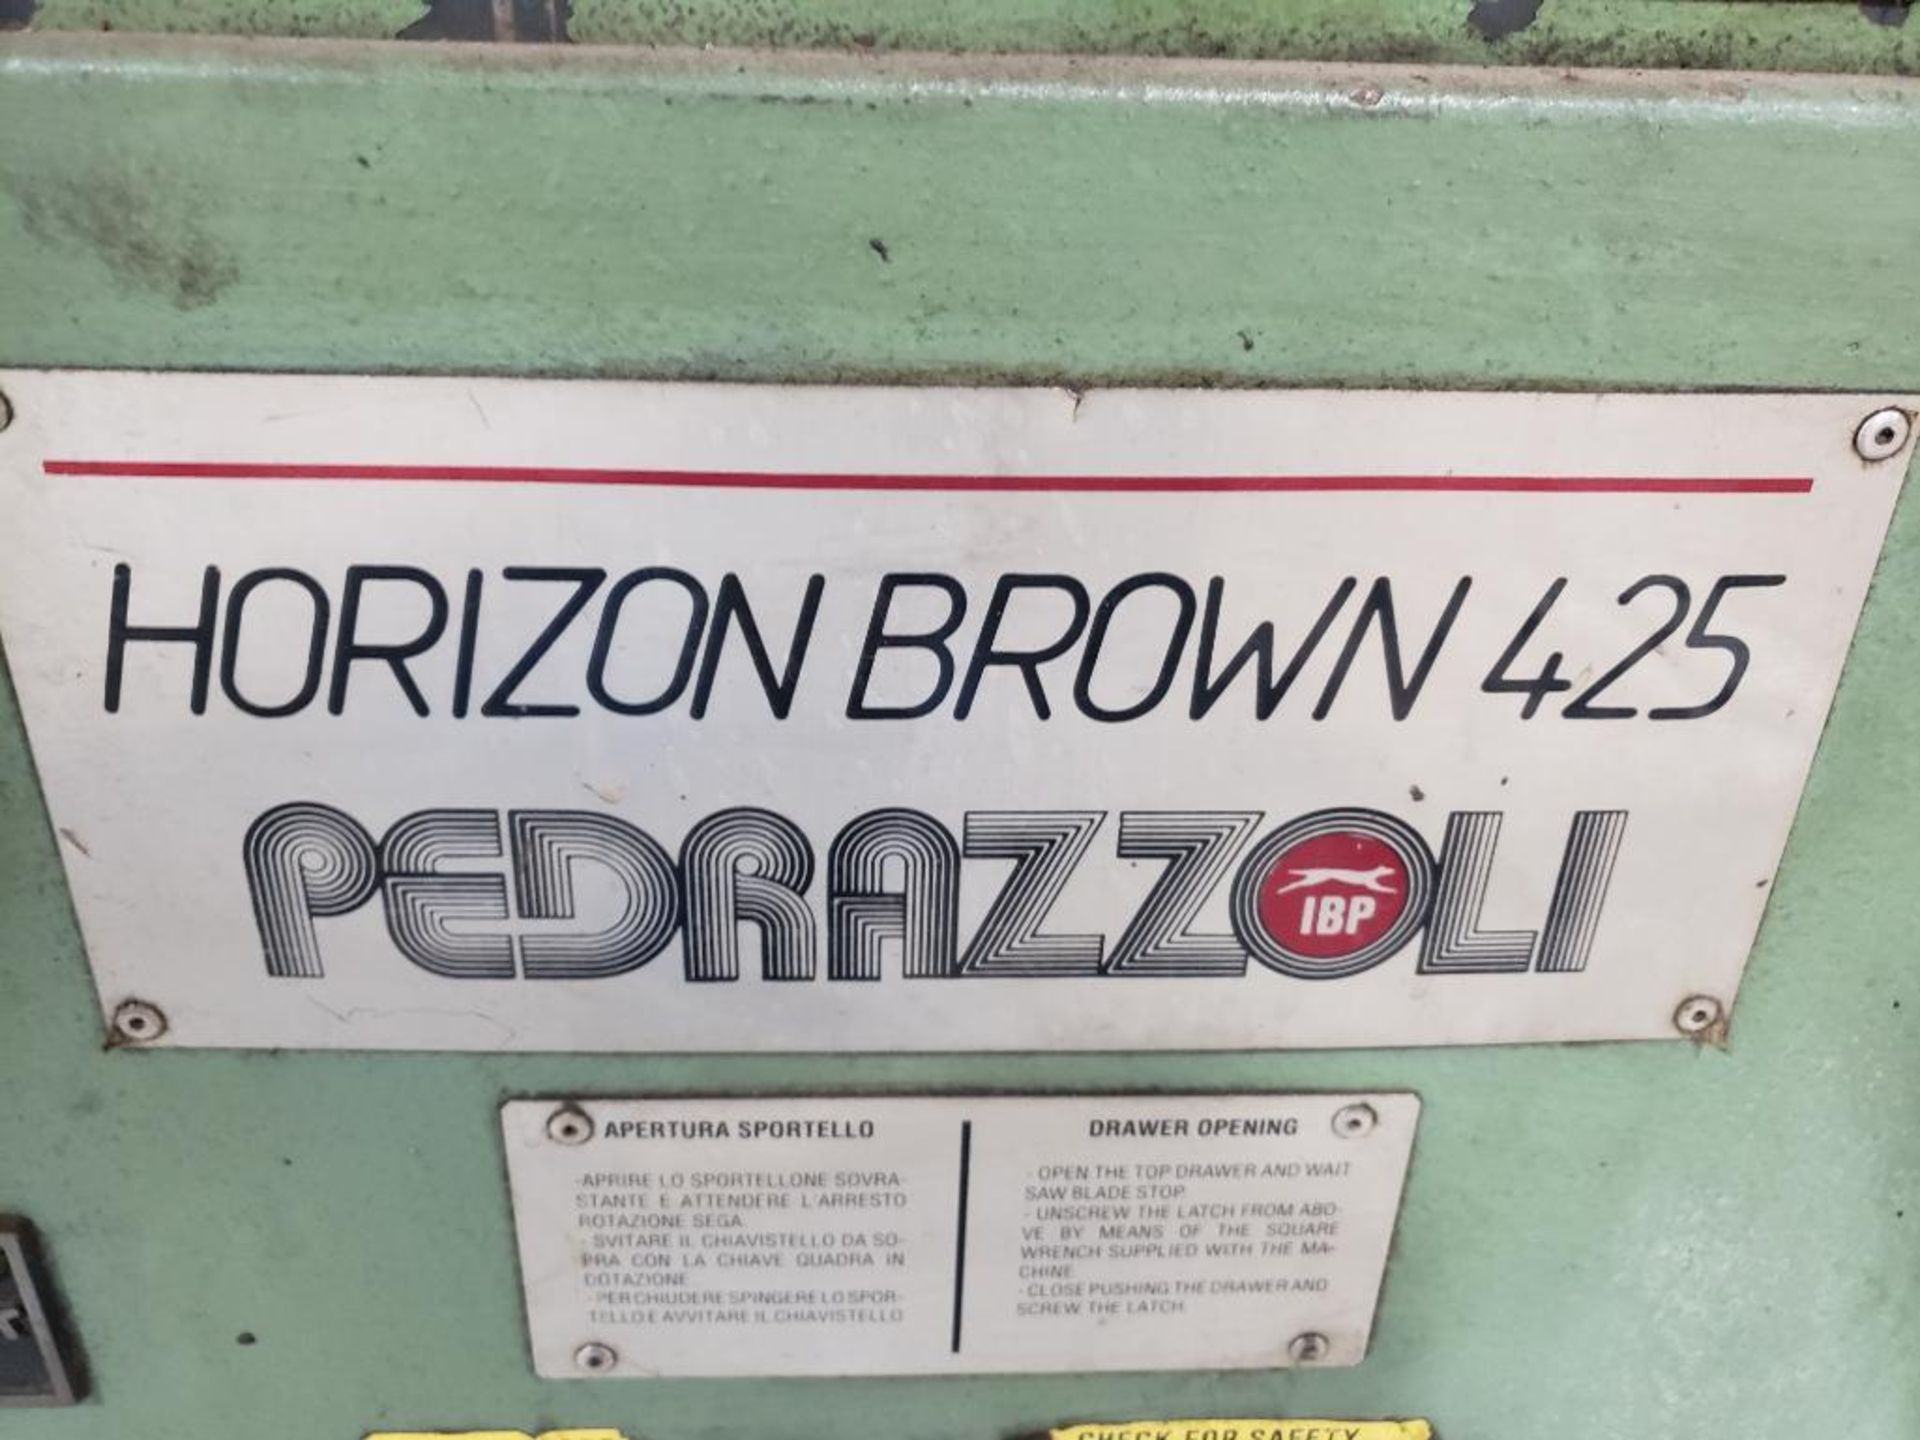 Pedrazzoli saw. Model HB425M. - Image 2 of 23